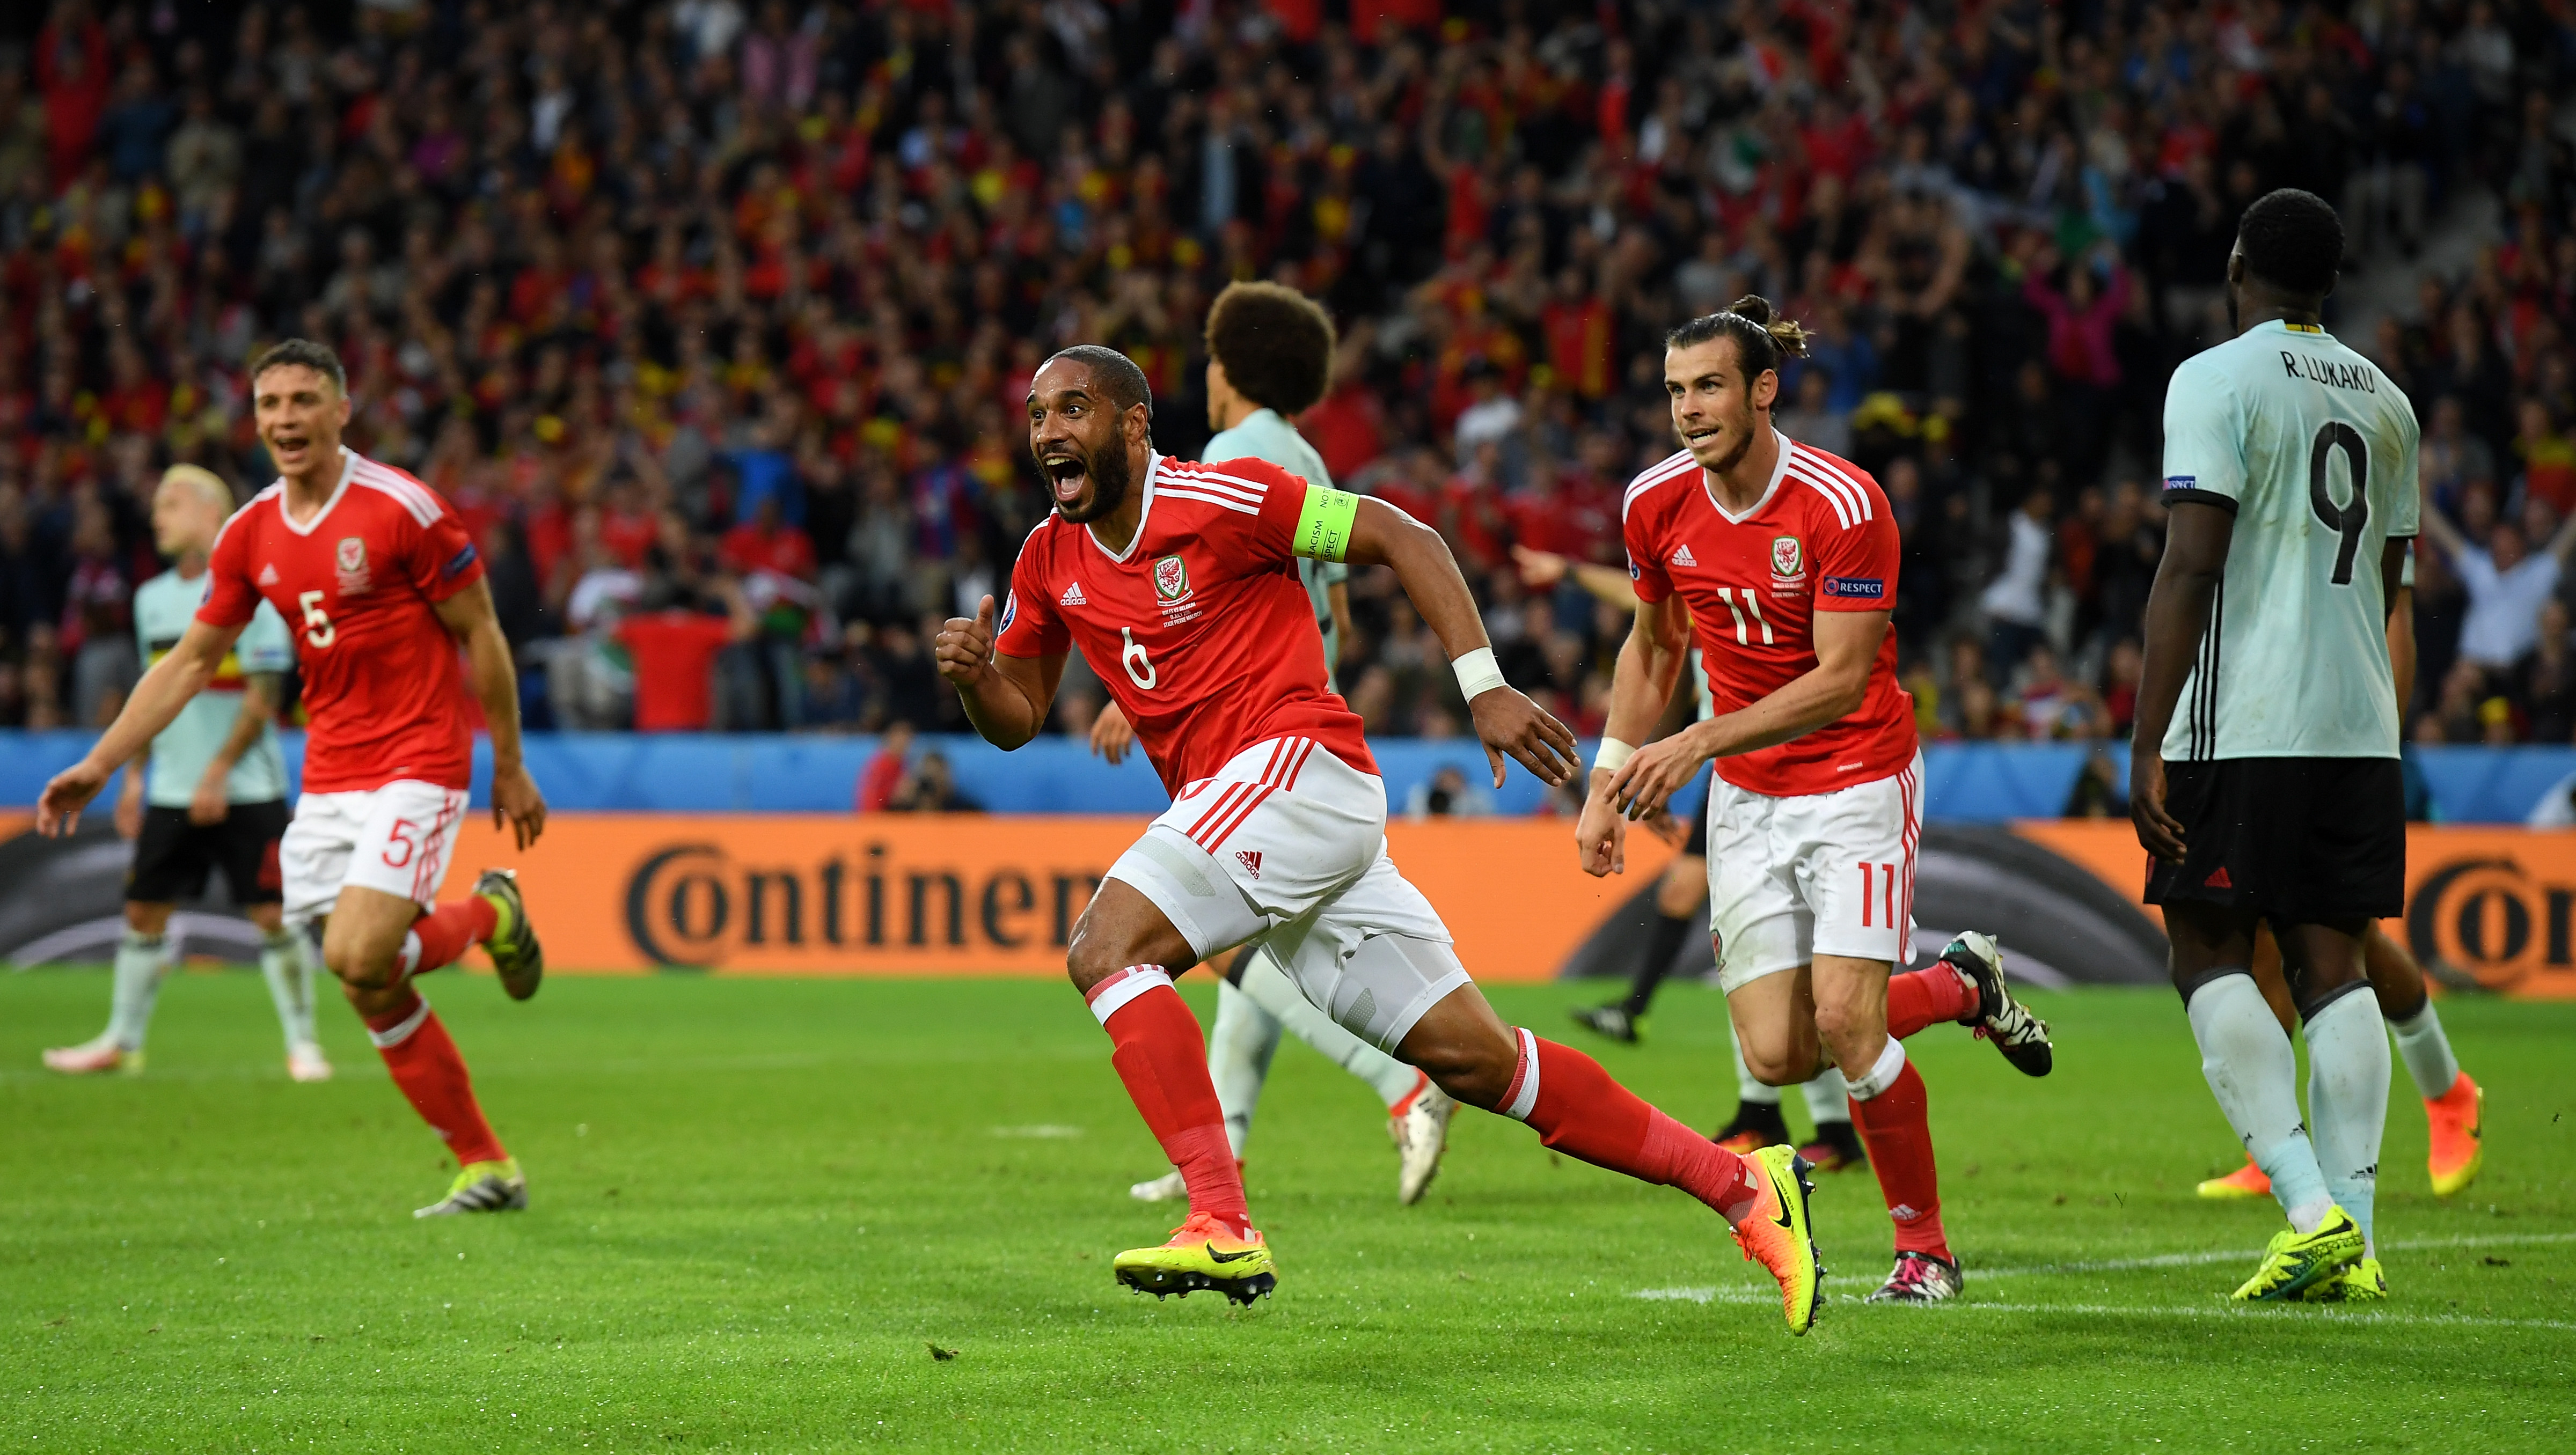 Euro 2016 | Wales continue dream run into semis with win over Belgium